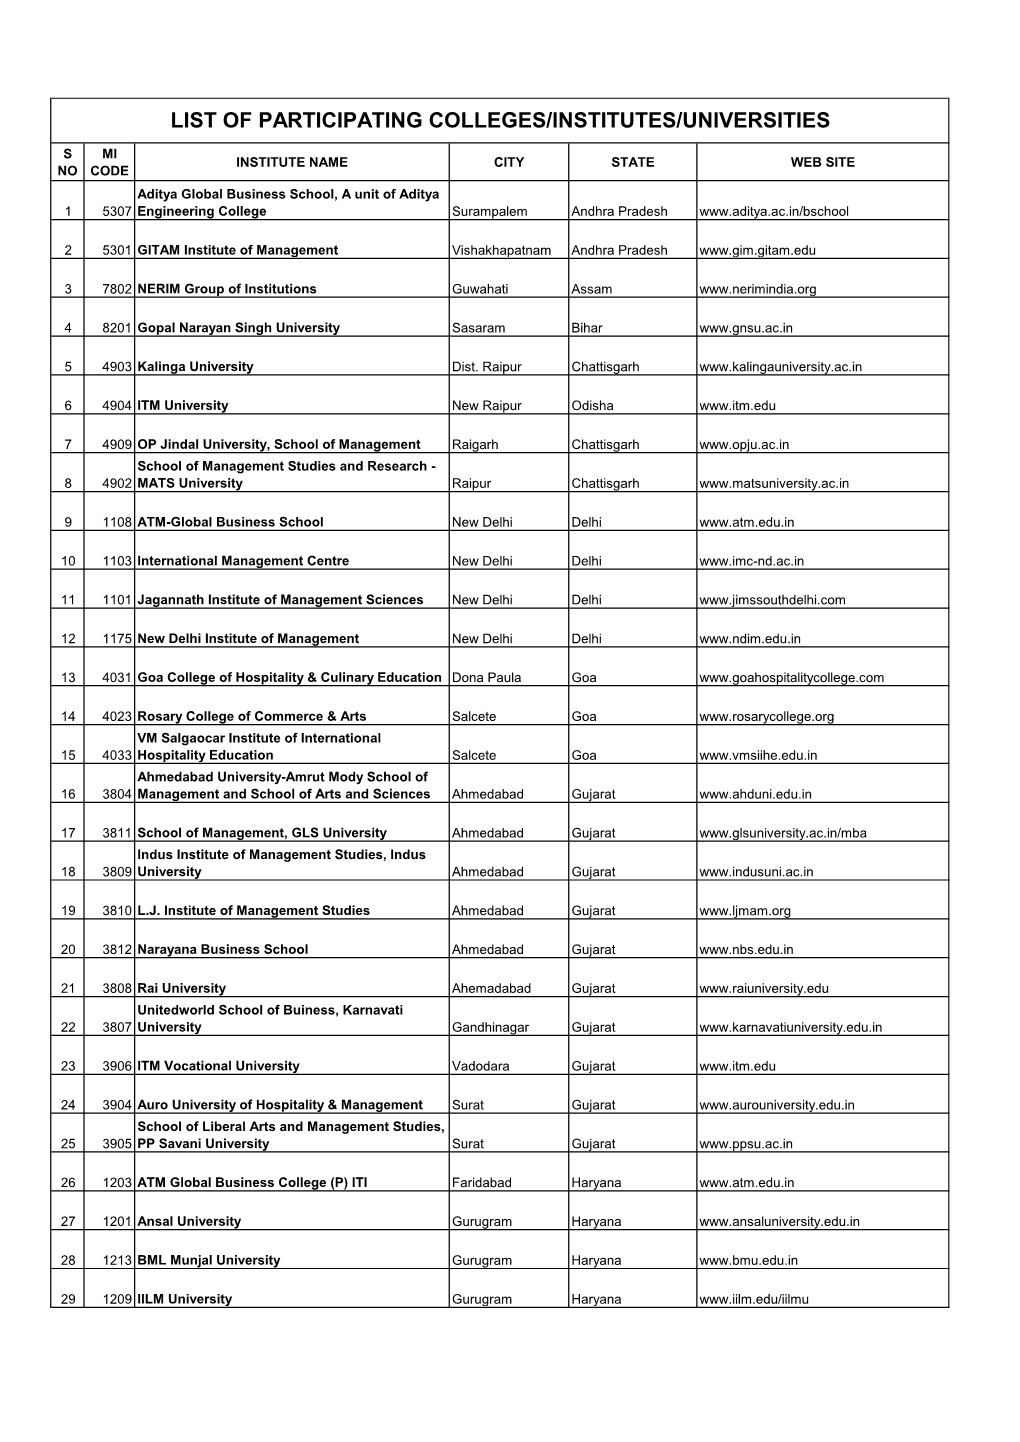 List of Participating Colleges/Institutes/Universities